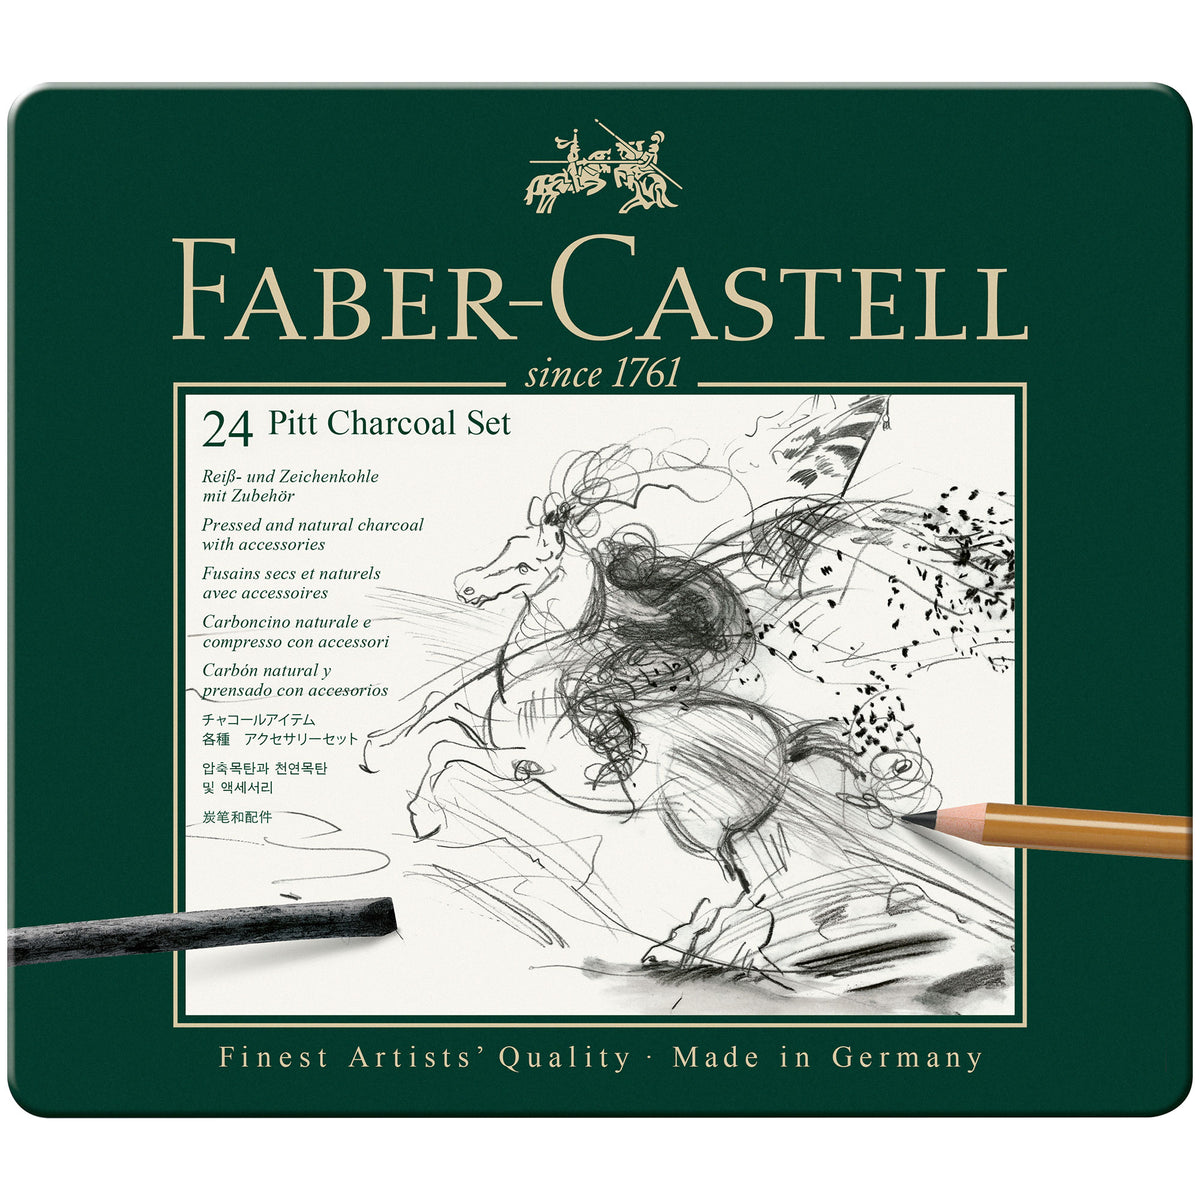 Faber-Castell Pitt Charcoal - Set of 24 - Box